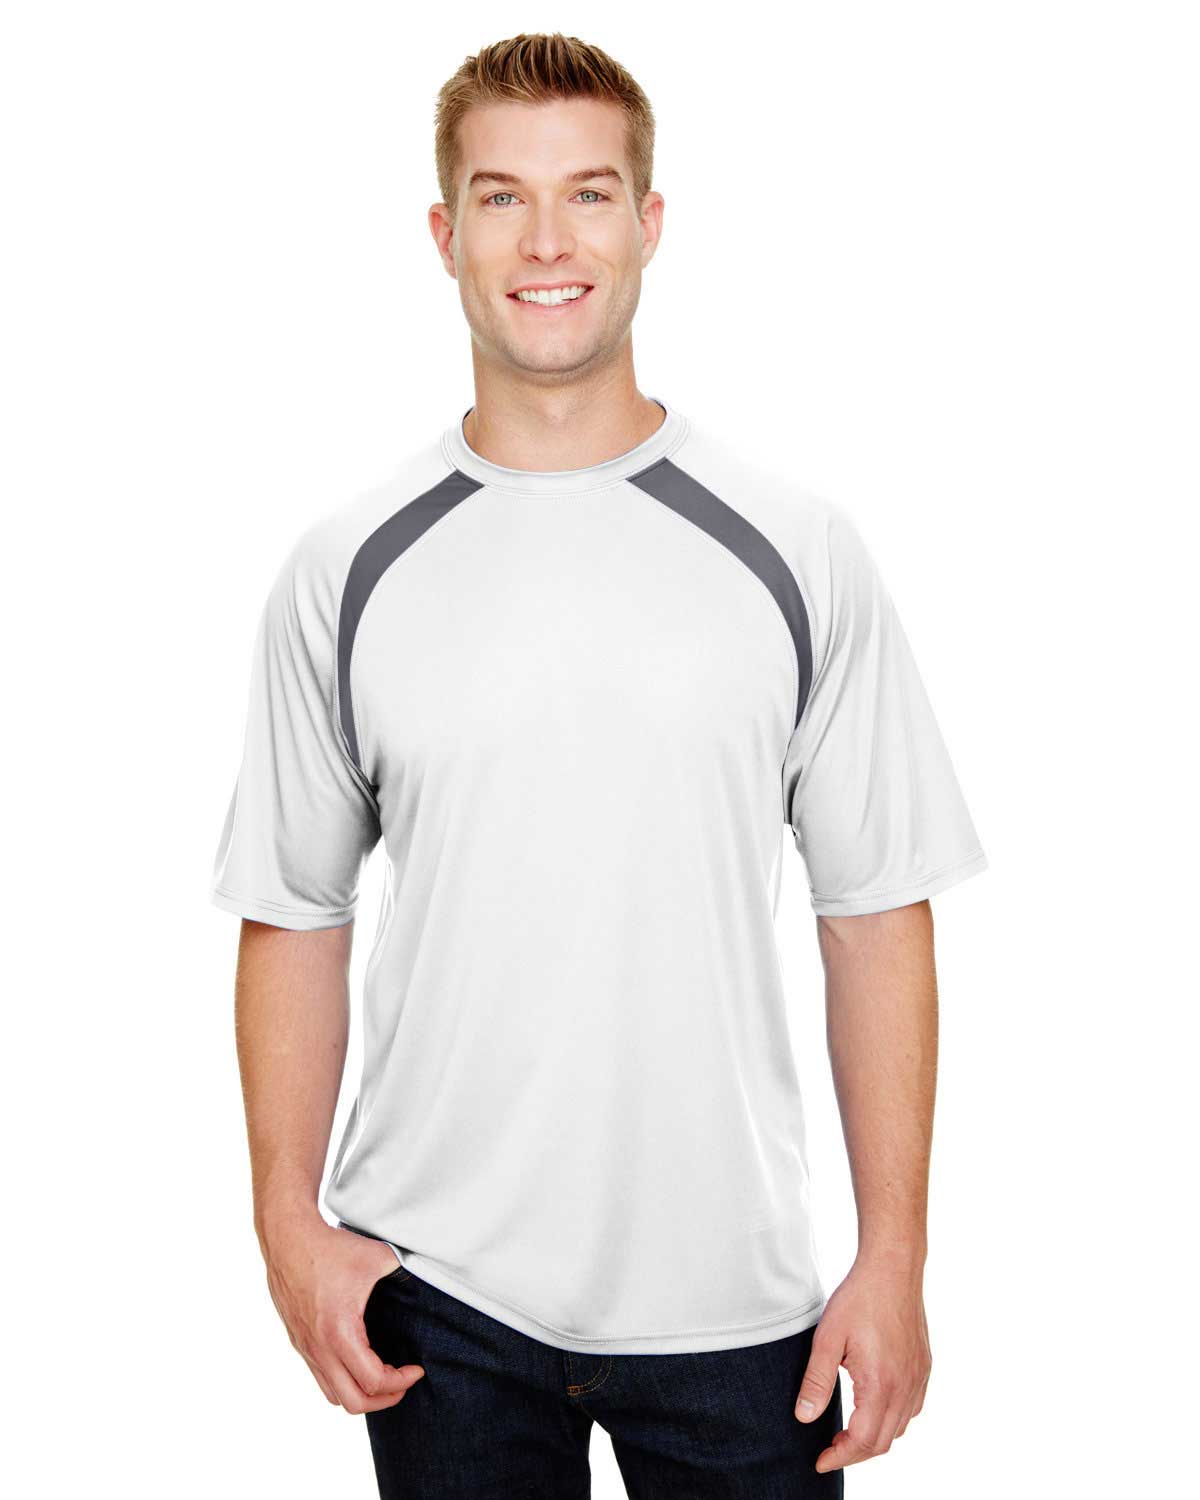 A4 N3001 Men 4 oz. Spartan Short Sleeve Color Block Crew Neck T-Shirt at Apparelstation